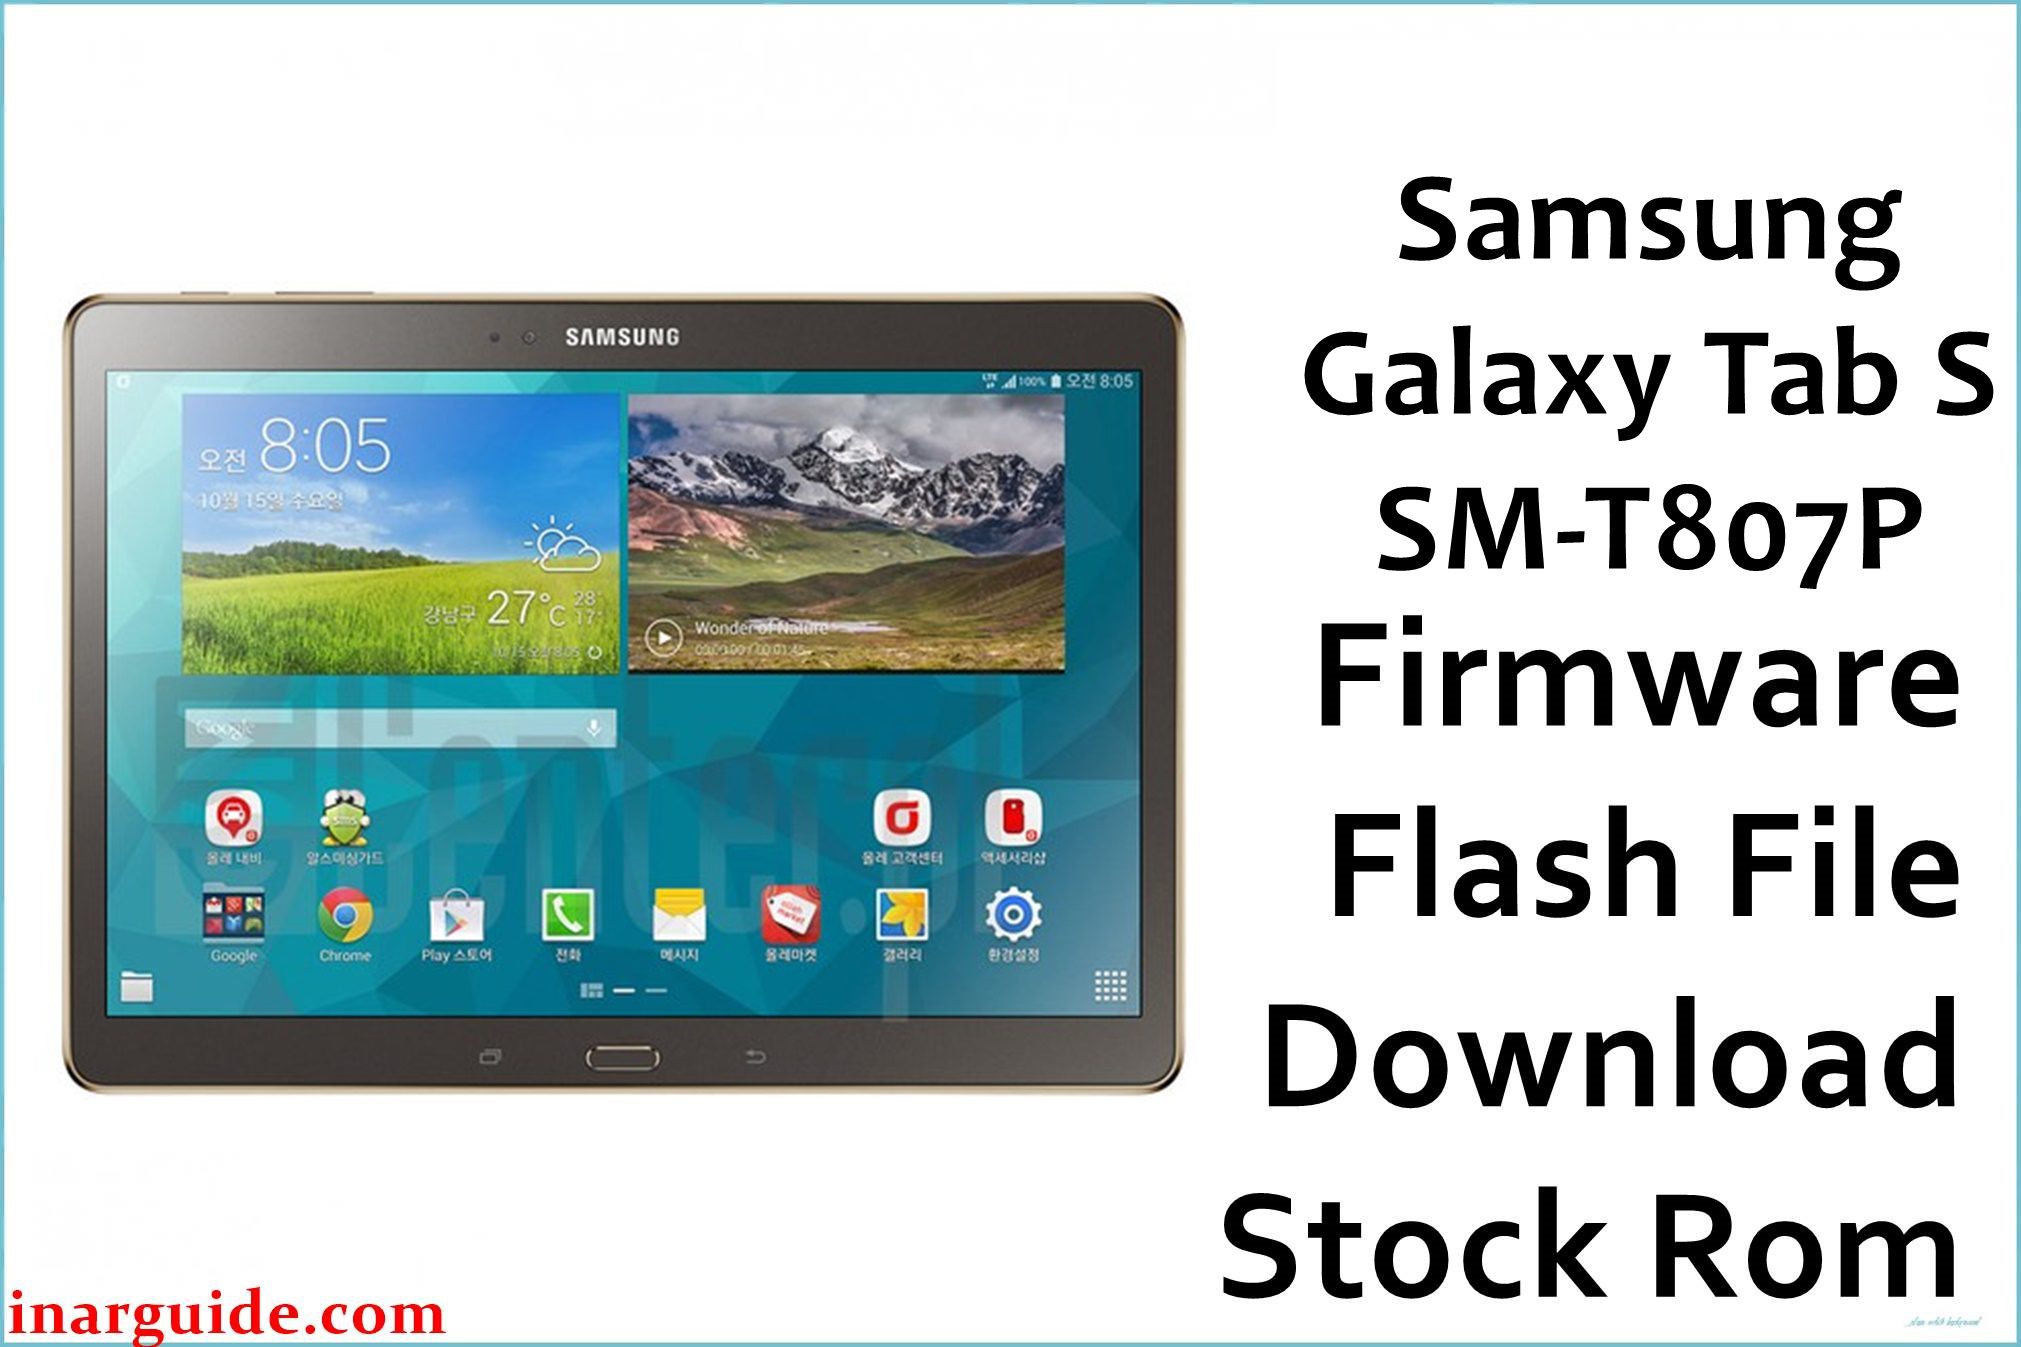 Samsung Galaxy Tab S SM T807P